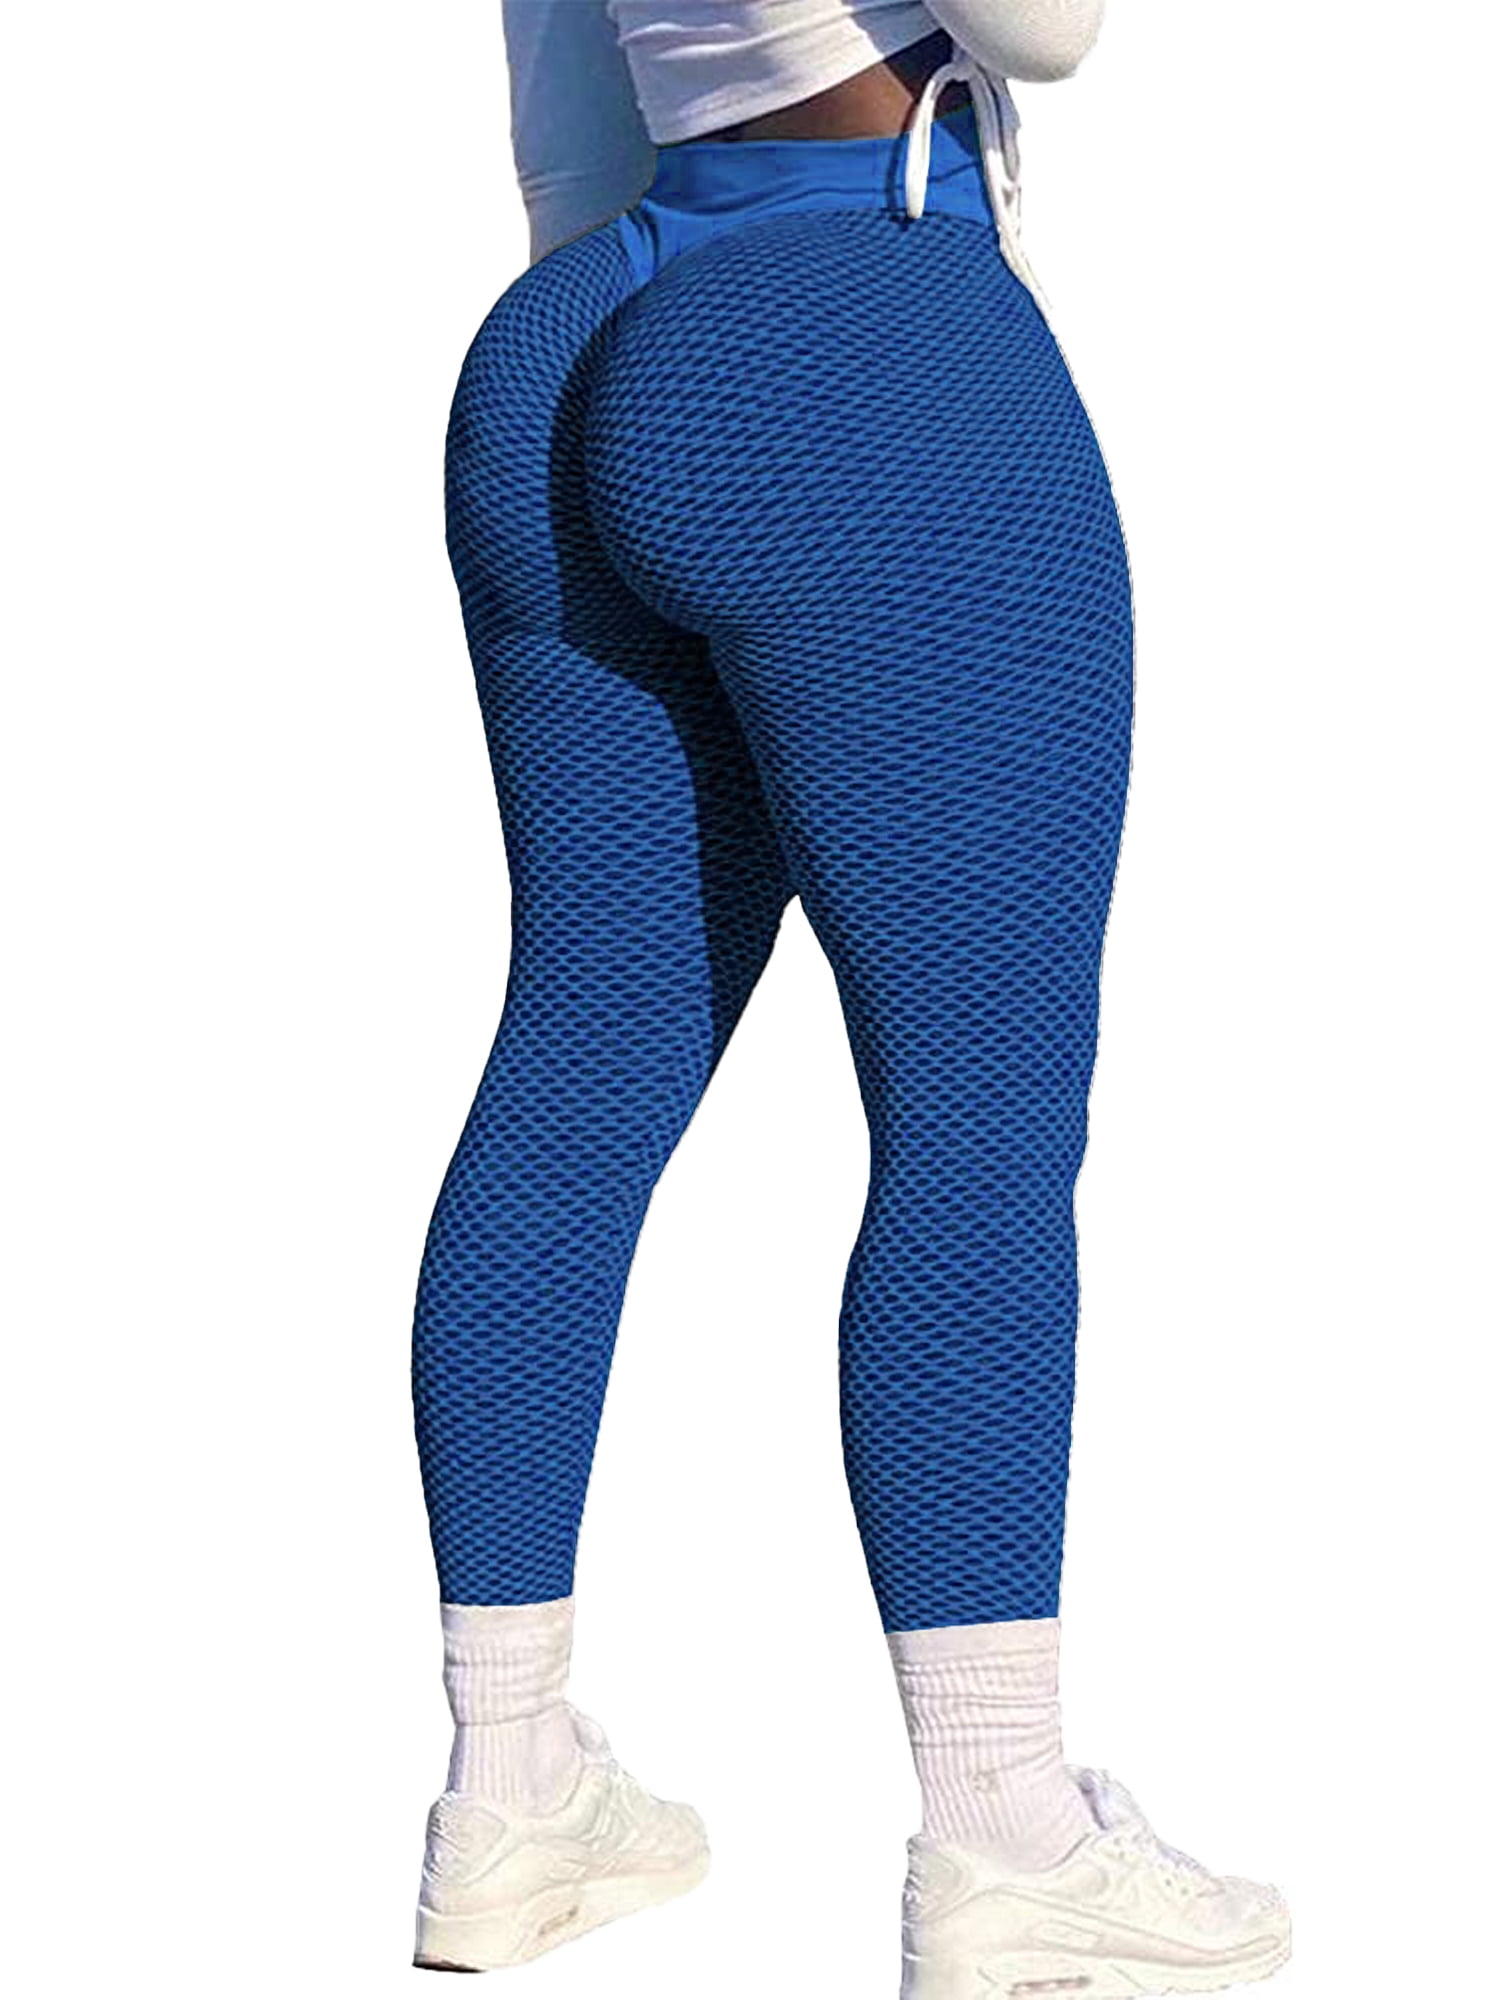 RIOJOY Women's High Waist Leggings 3D Mesh Knitted Ruched